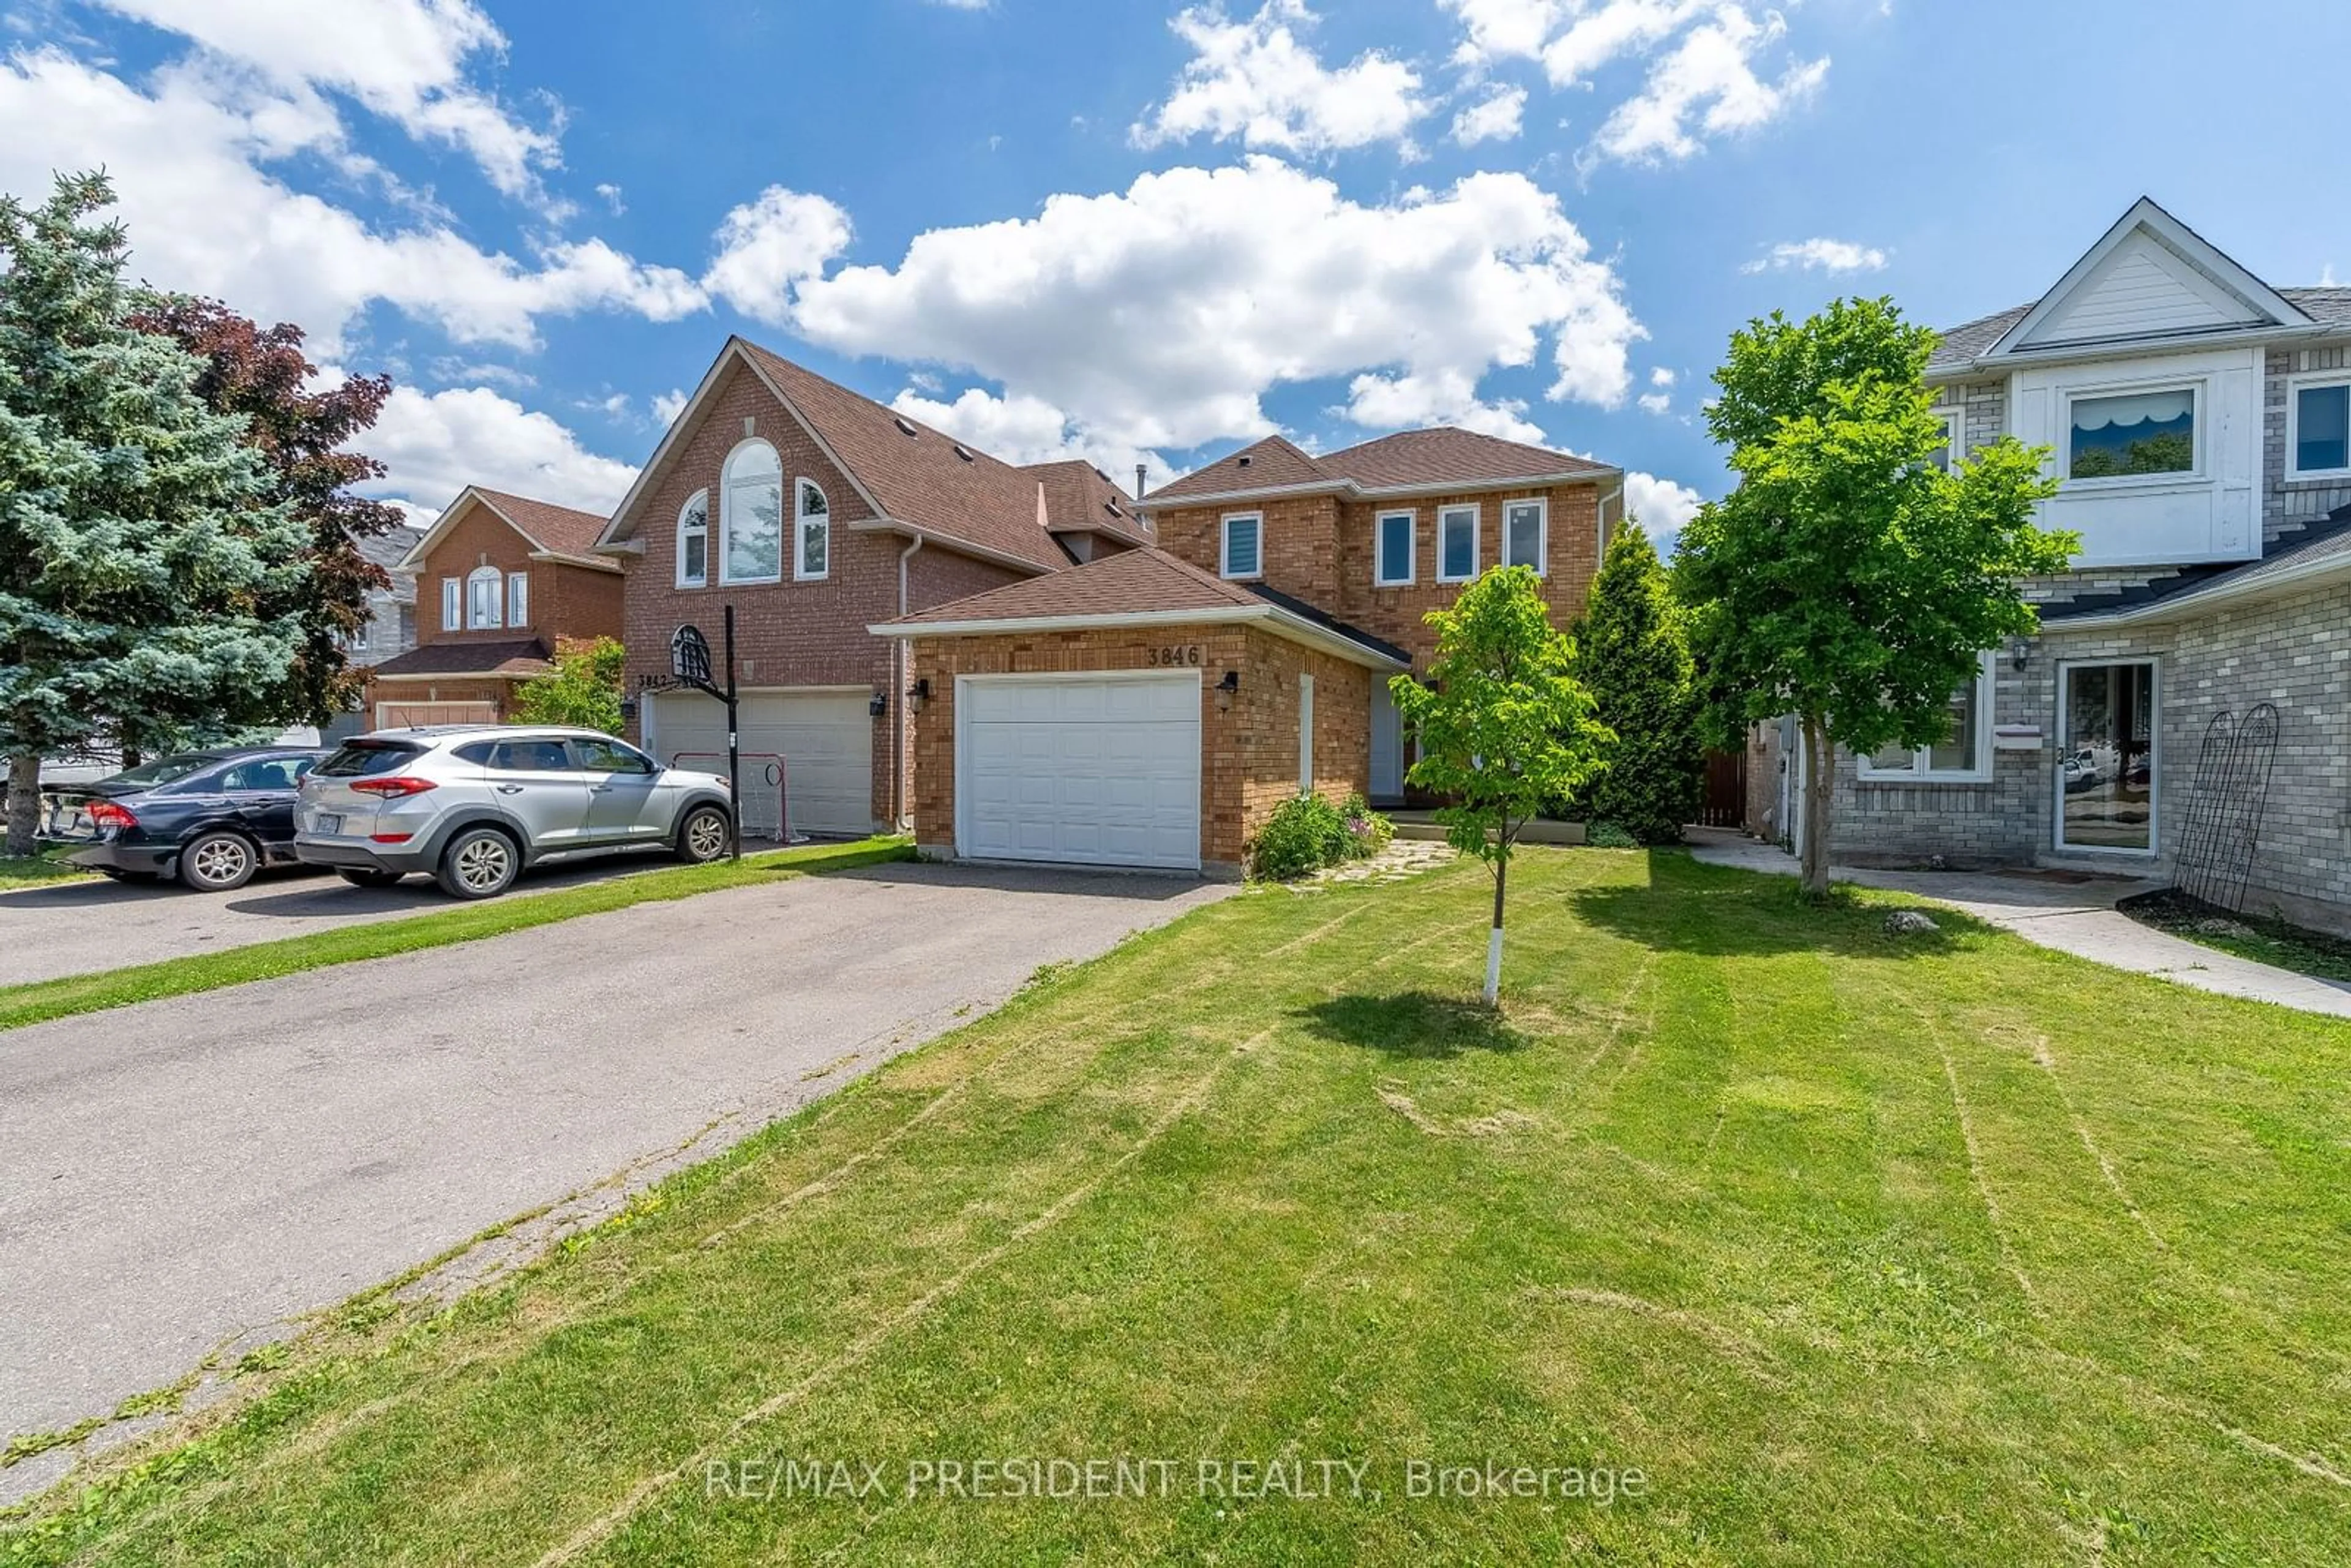 Frontside or backside of a home for 3846 Ponderosa Lane, Mississauga Ontario L5N 6W4